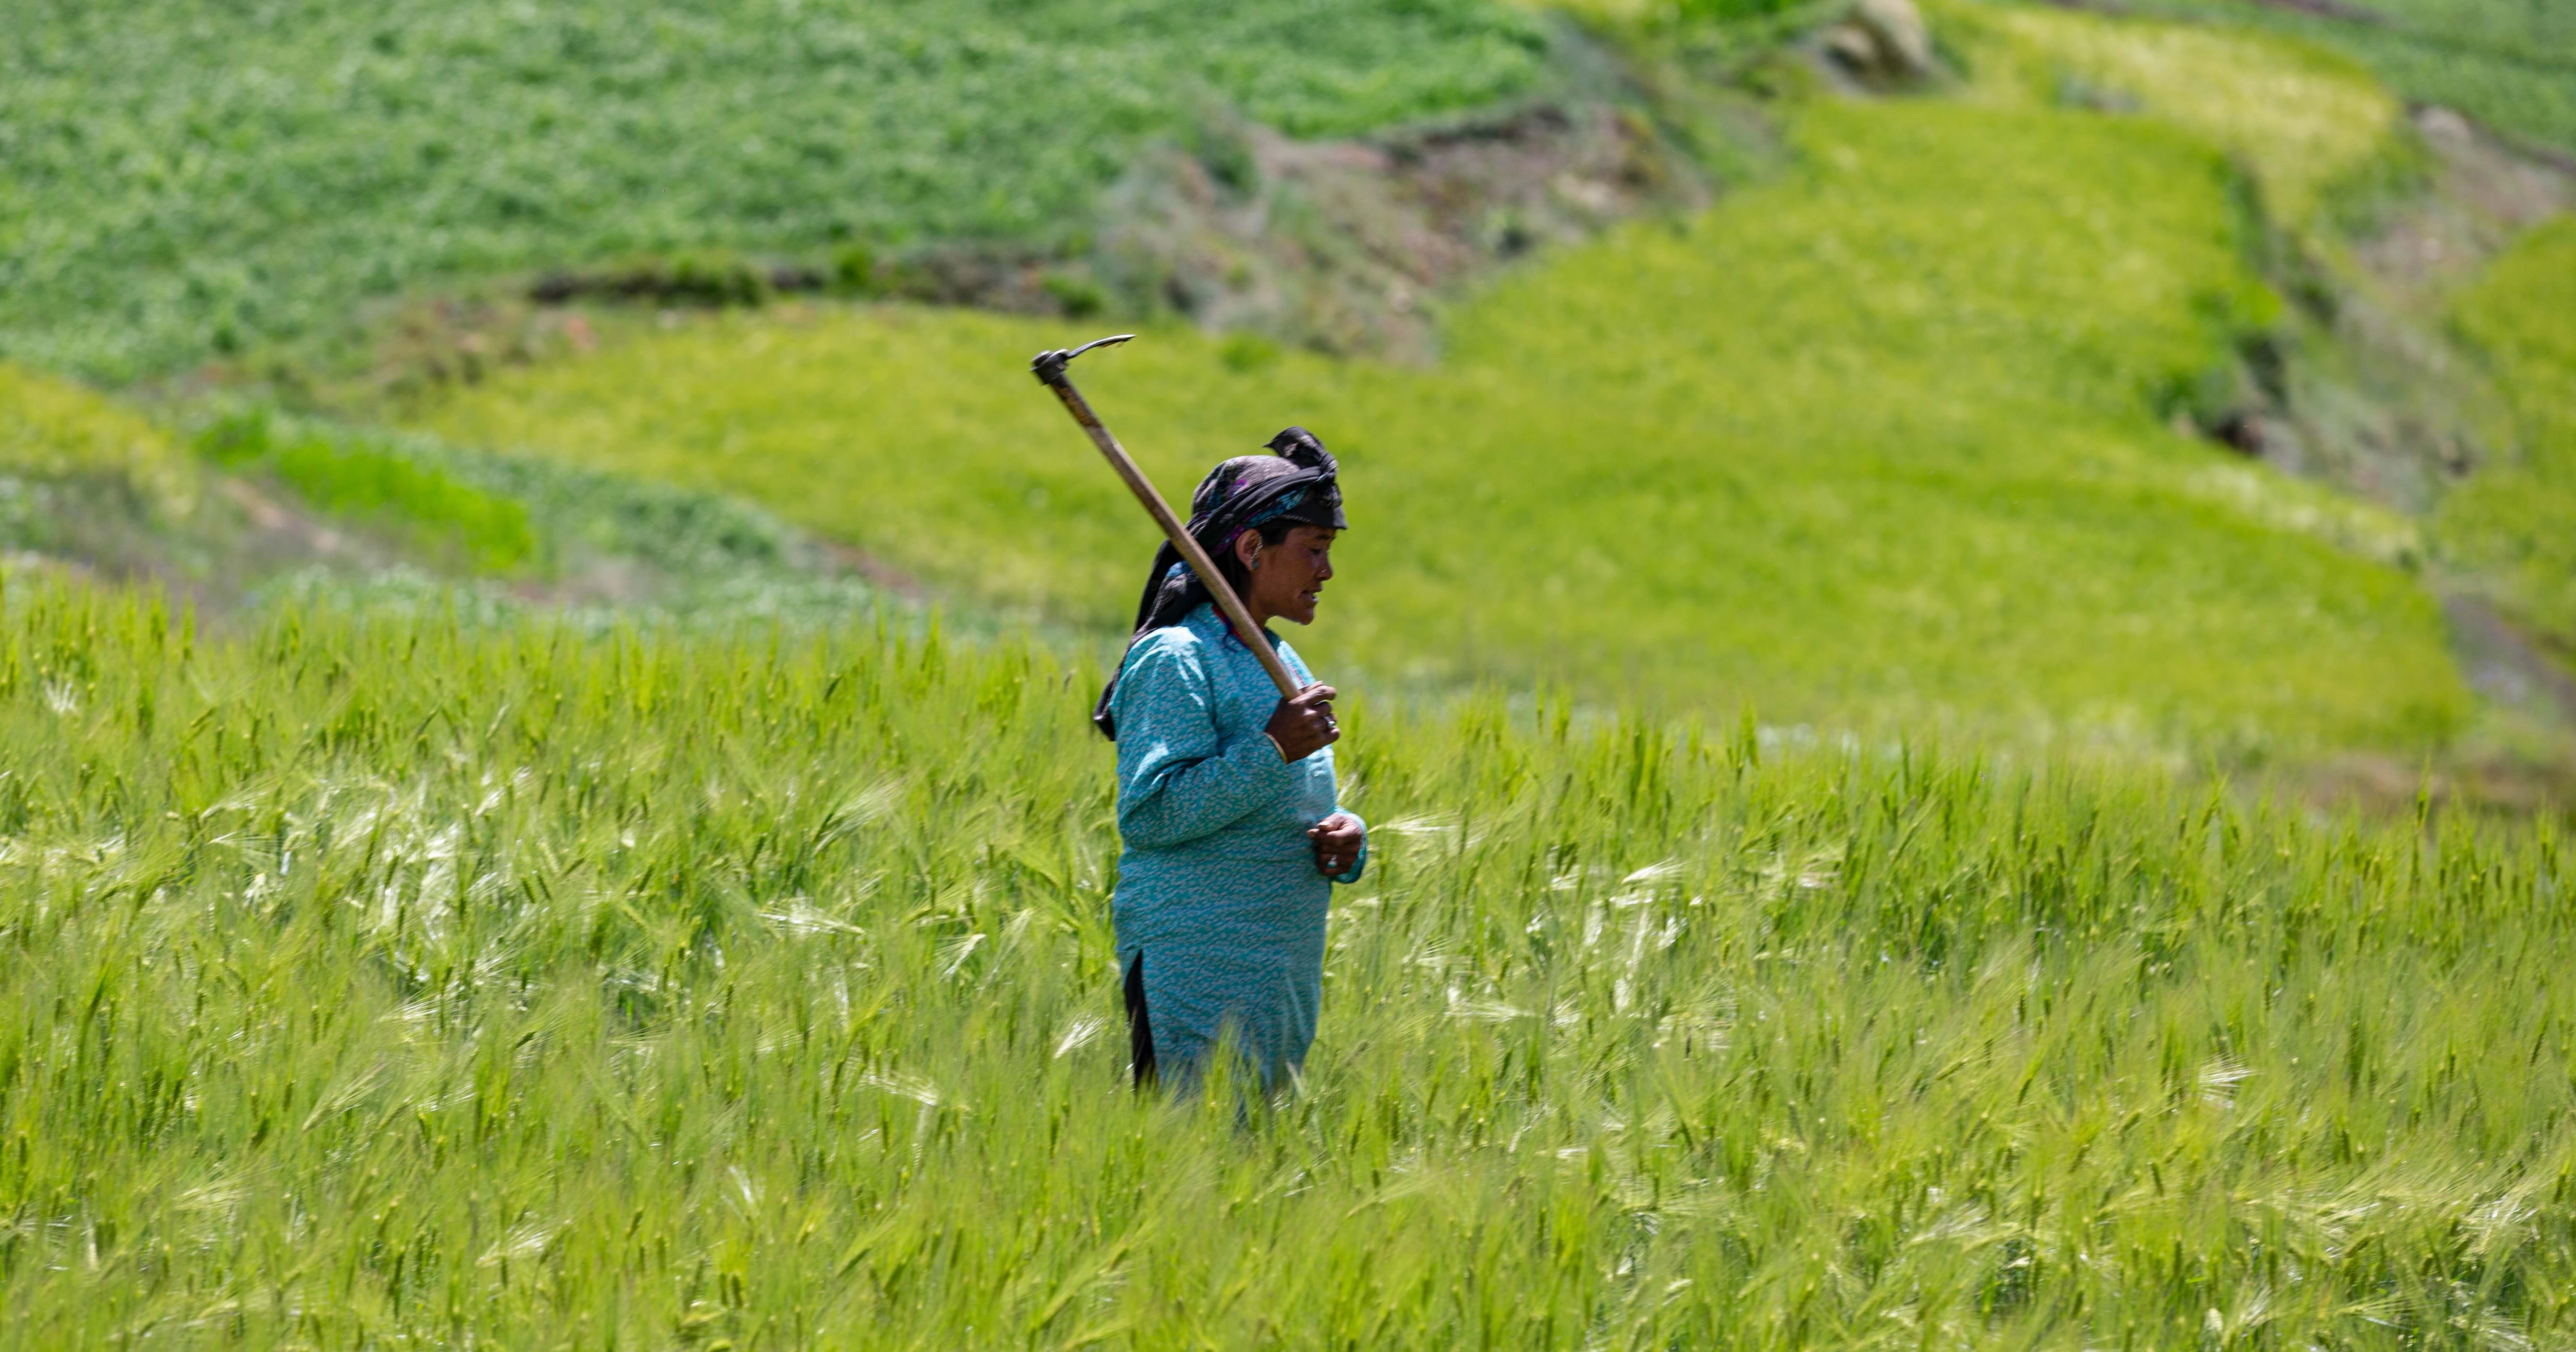 A farmer in Komic, India. Photo by Marc Hastenteufel.